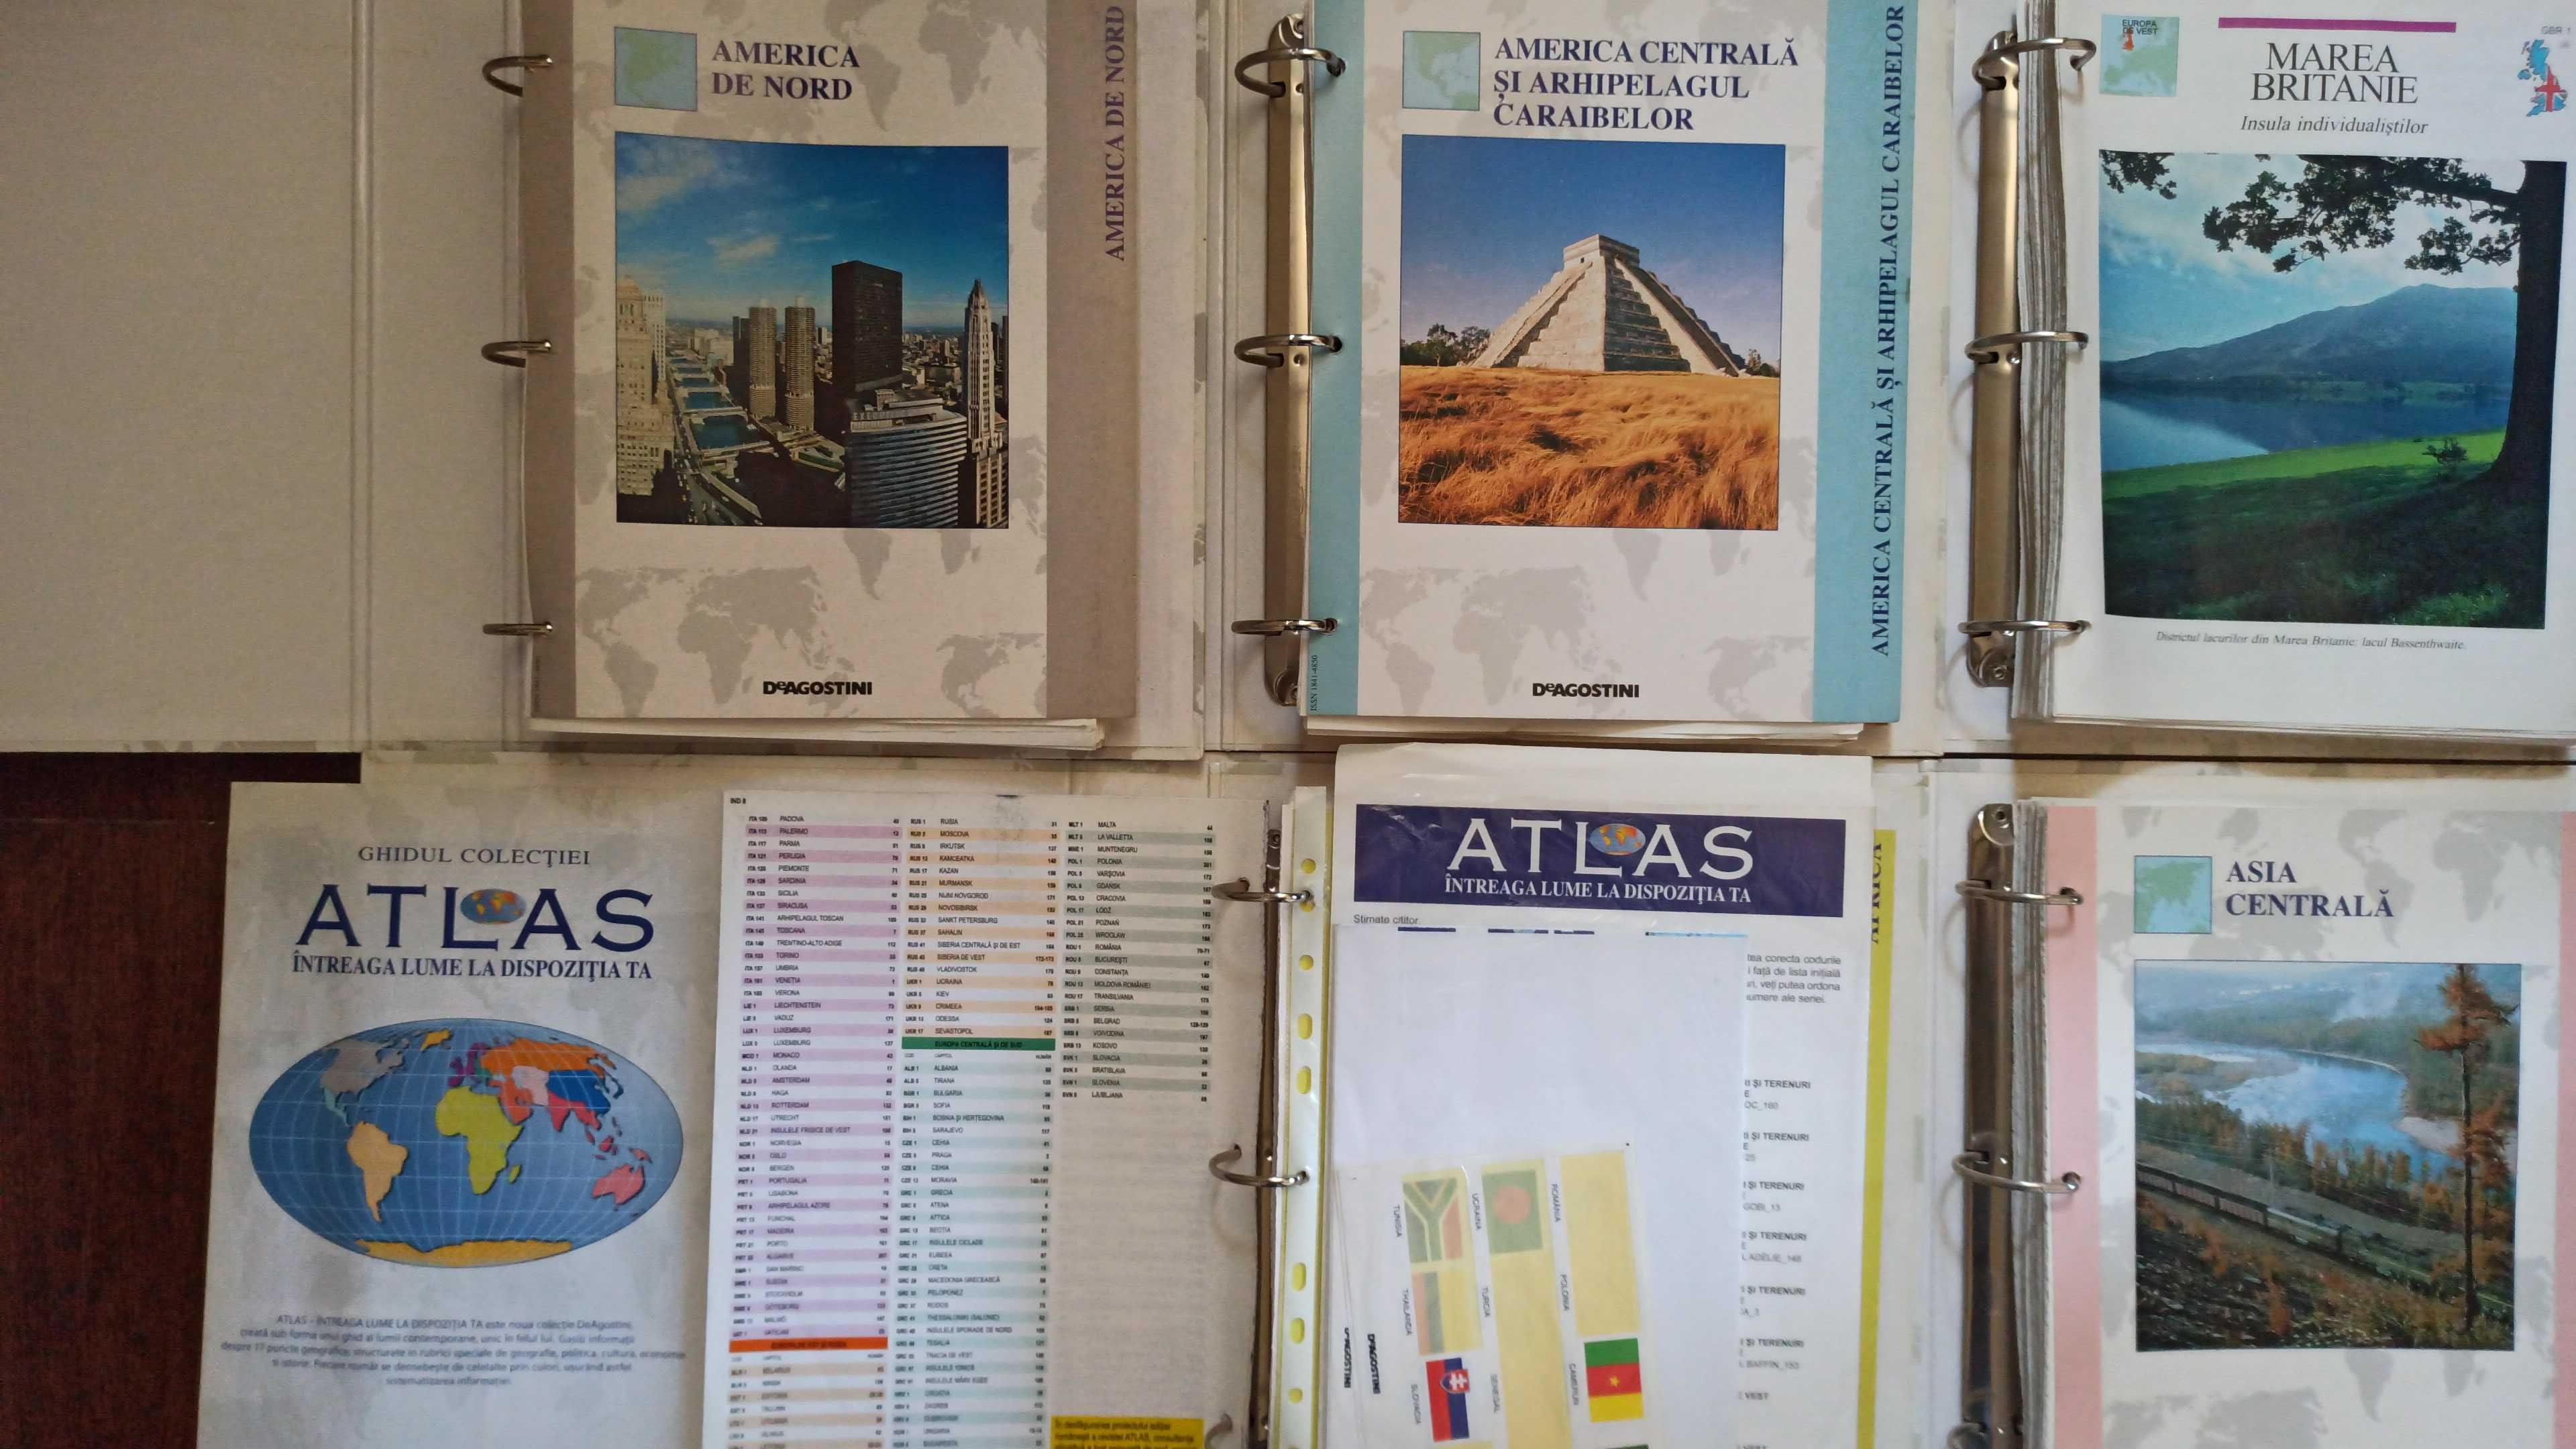 Colectie INTEGRALA Atlas intreaga lume la dispozitia ta